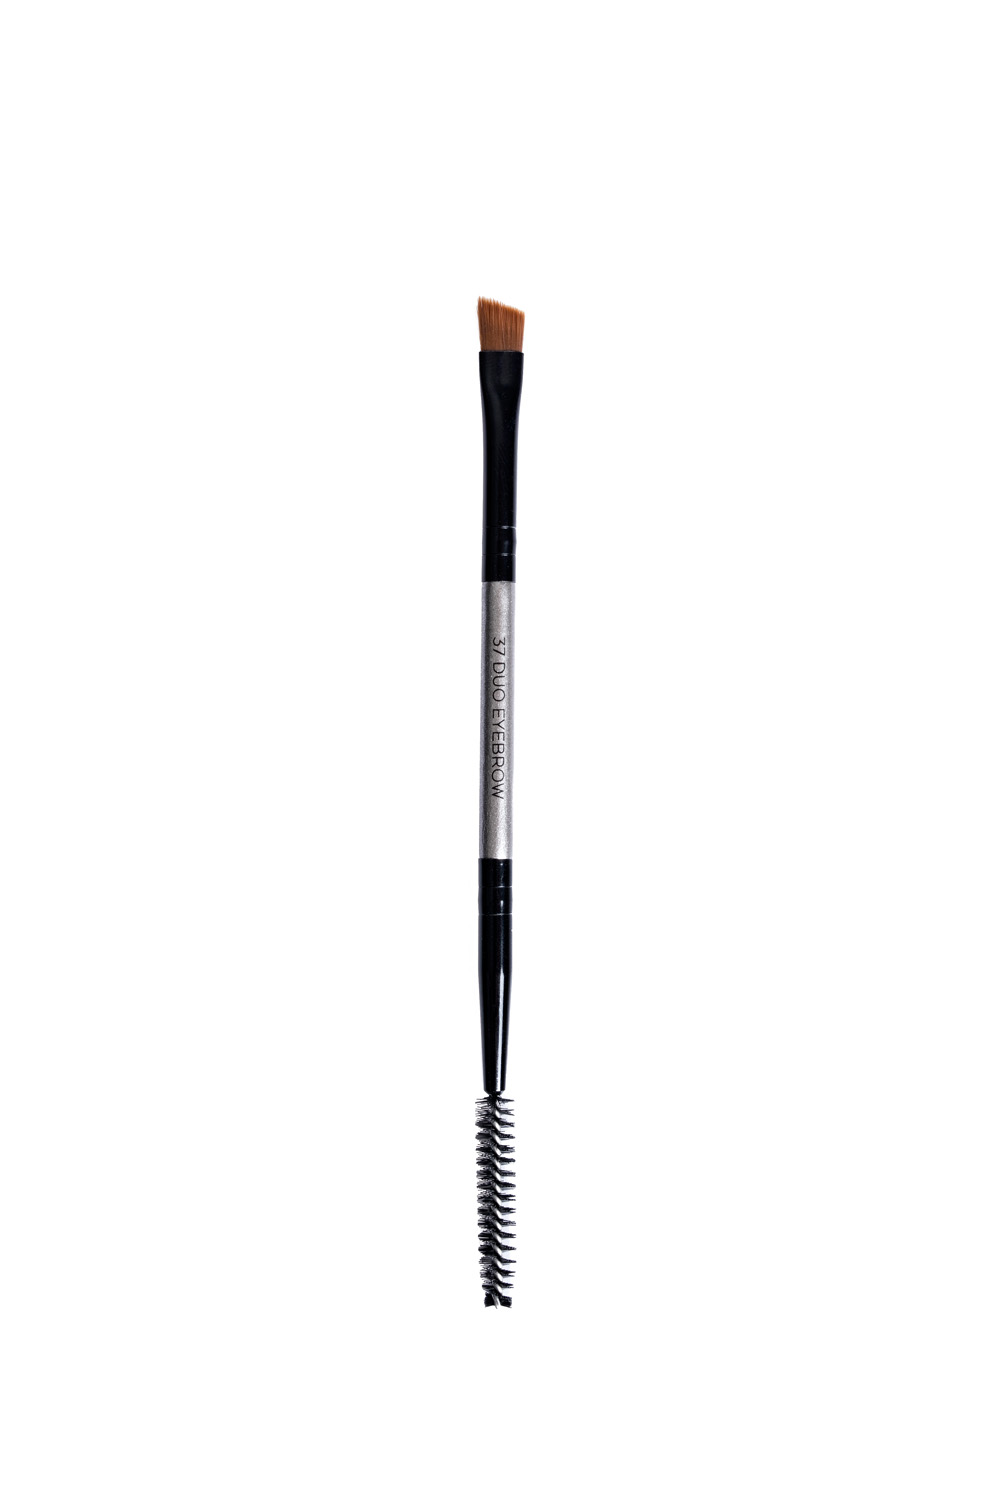 Jorat Cosmetics Lash & Brow Pencil Duo 1